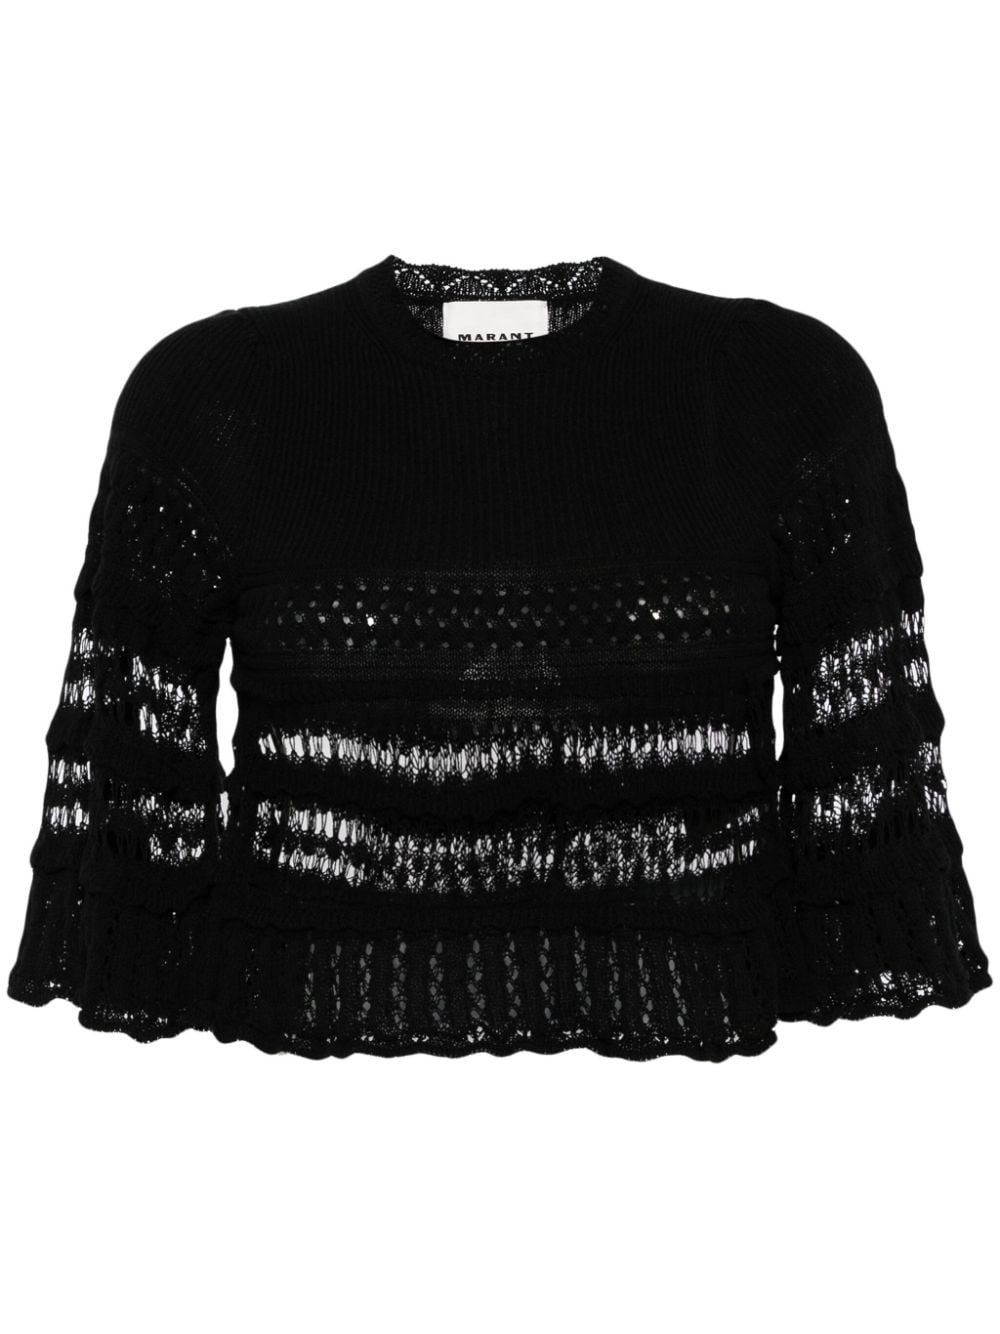 MARANT ÉTOILE Frizy crochet-knit top - Black von MARANT ÉTOILE